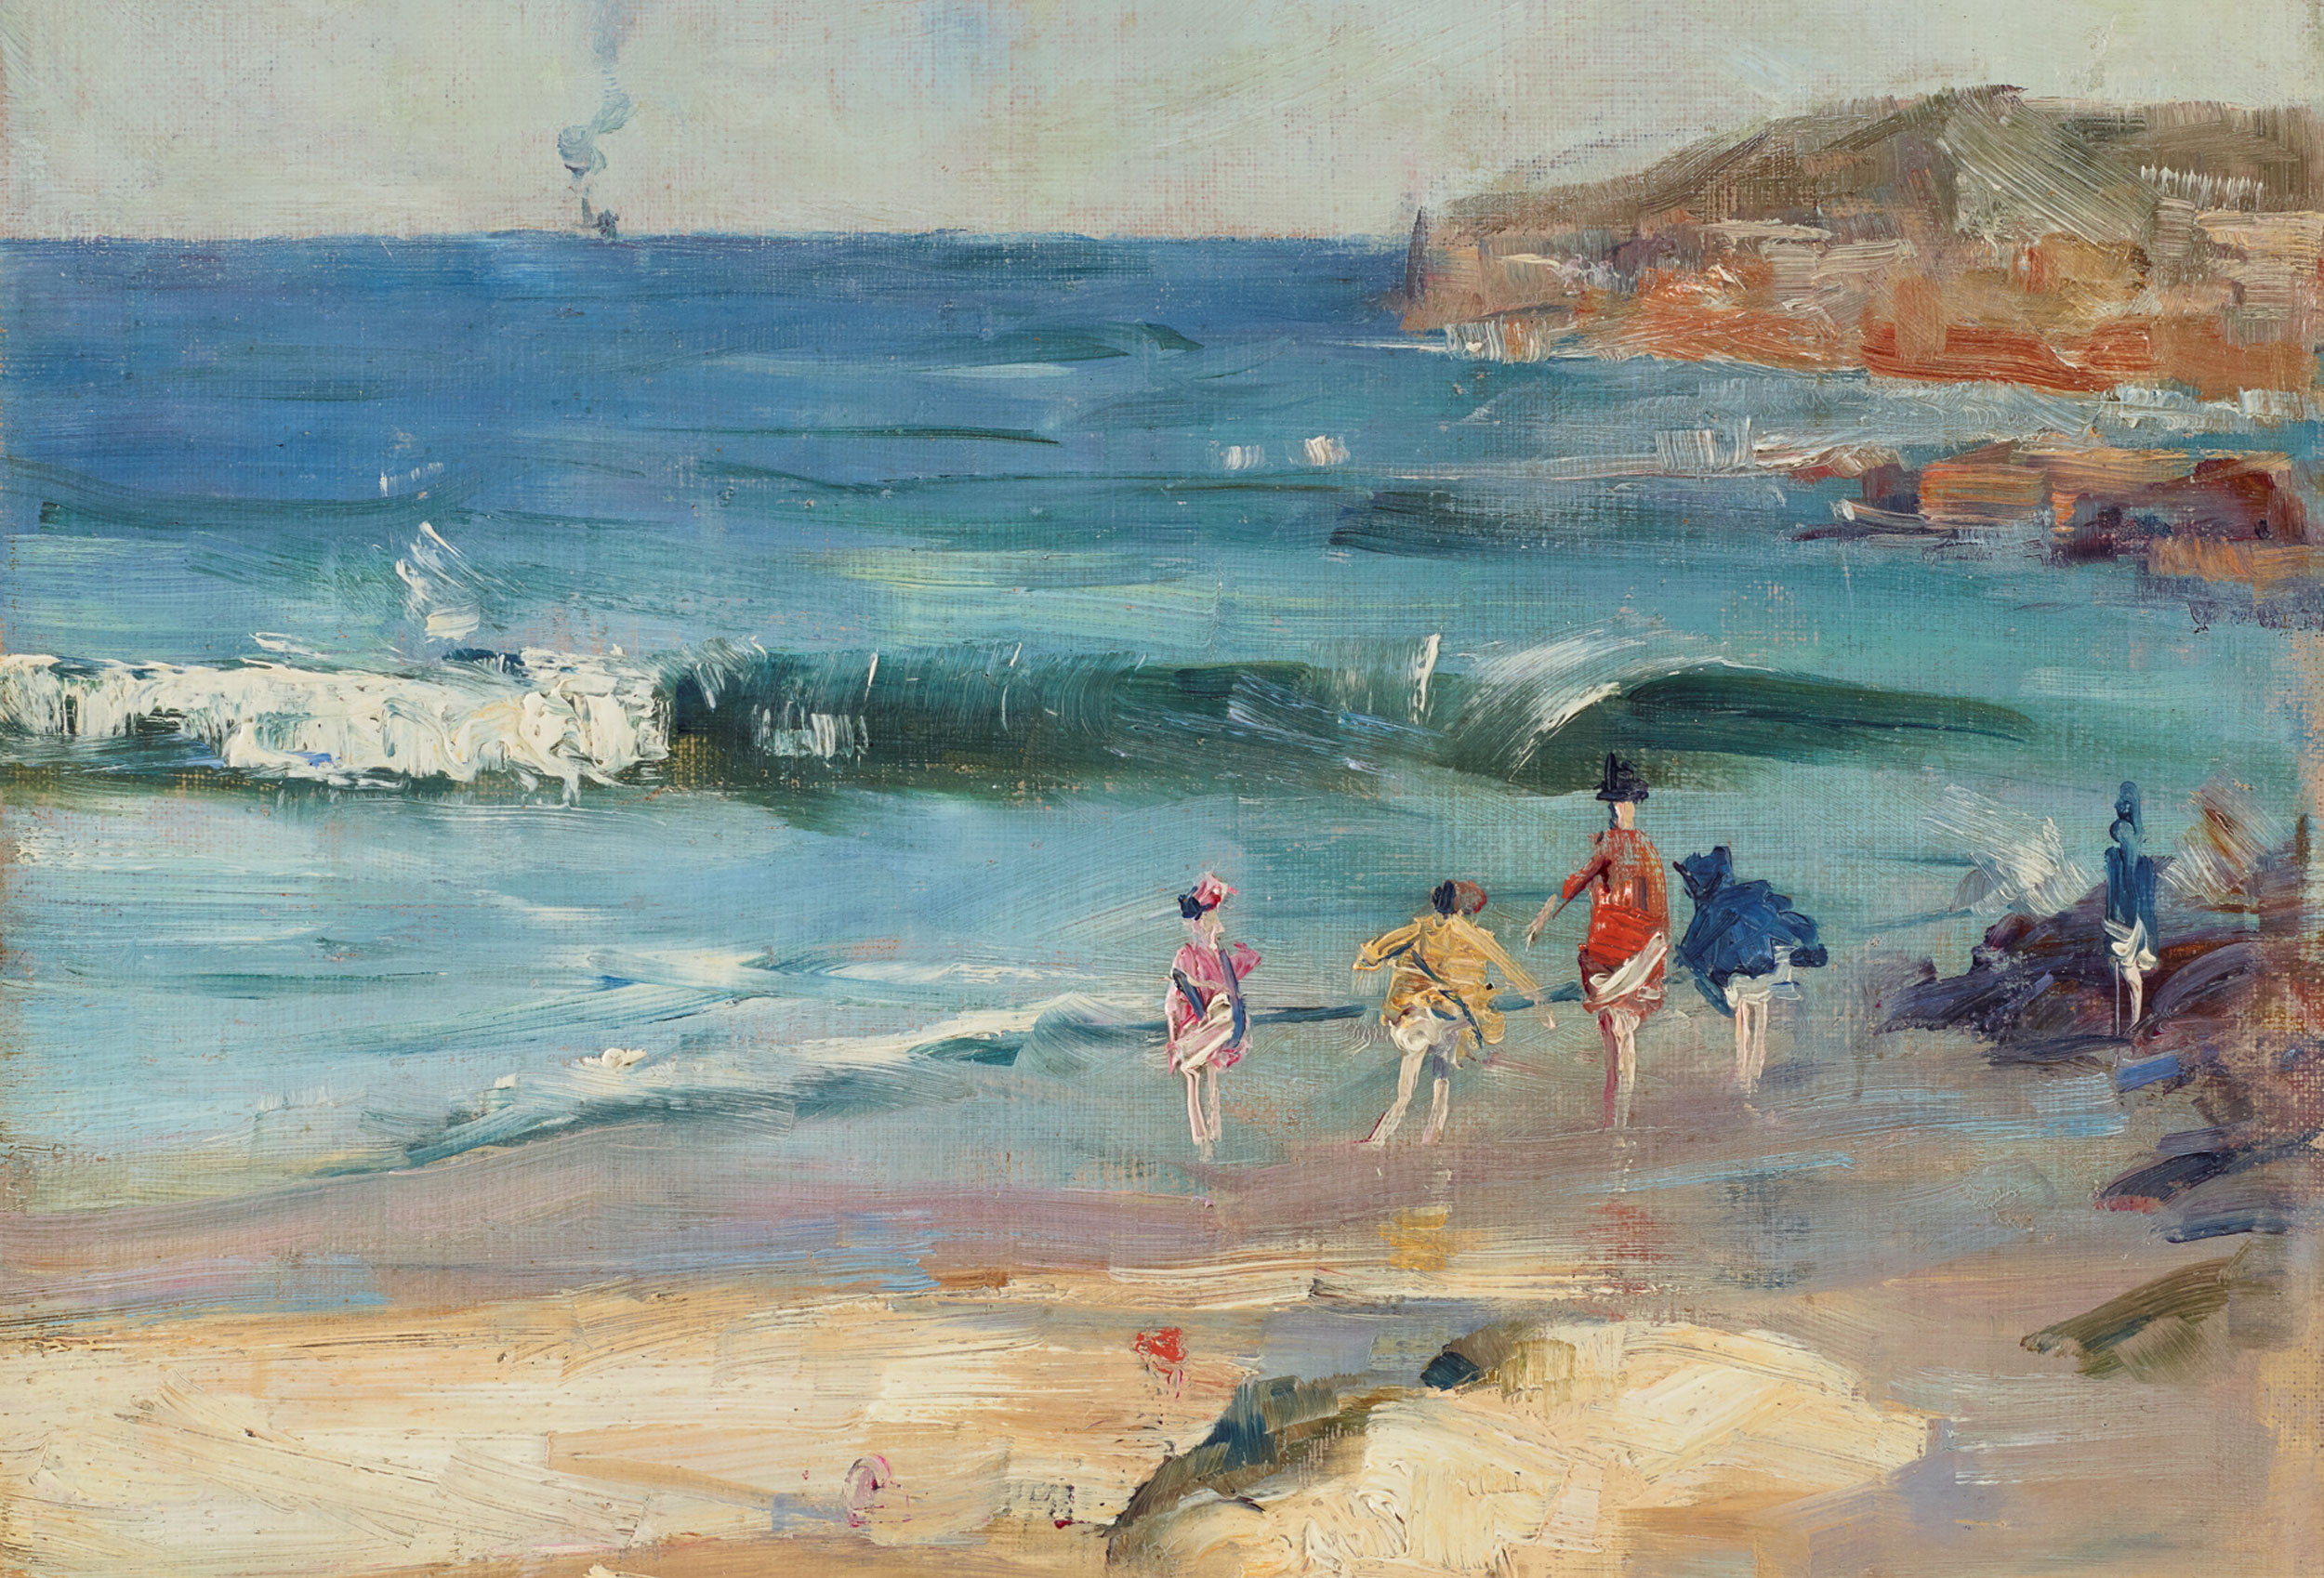 Arthur Streeton Beach scene 1890 (detail), Art Gallery of New South Wales